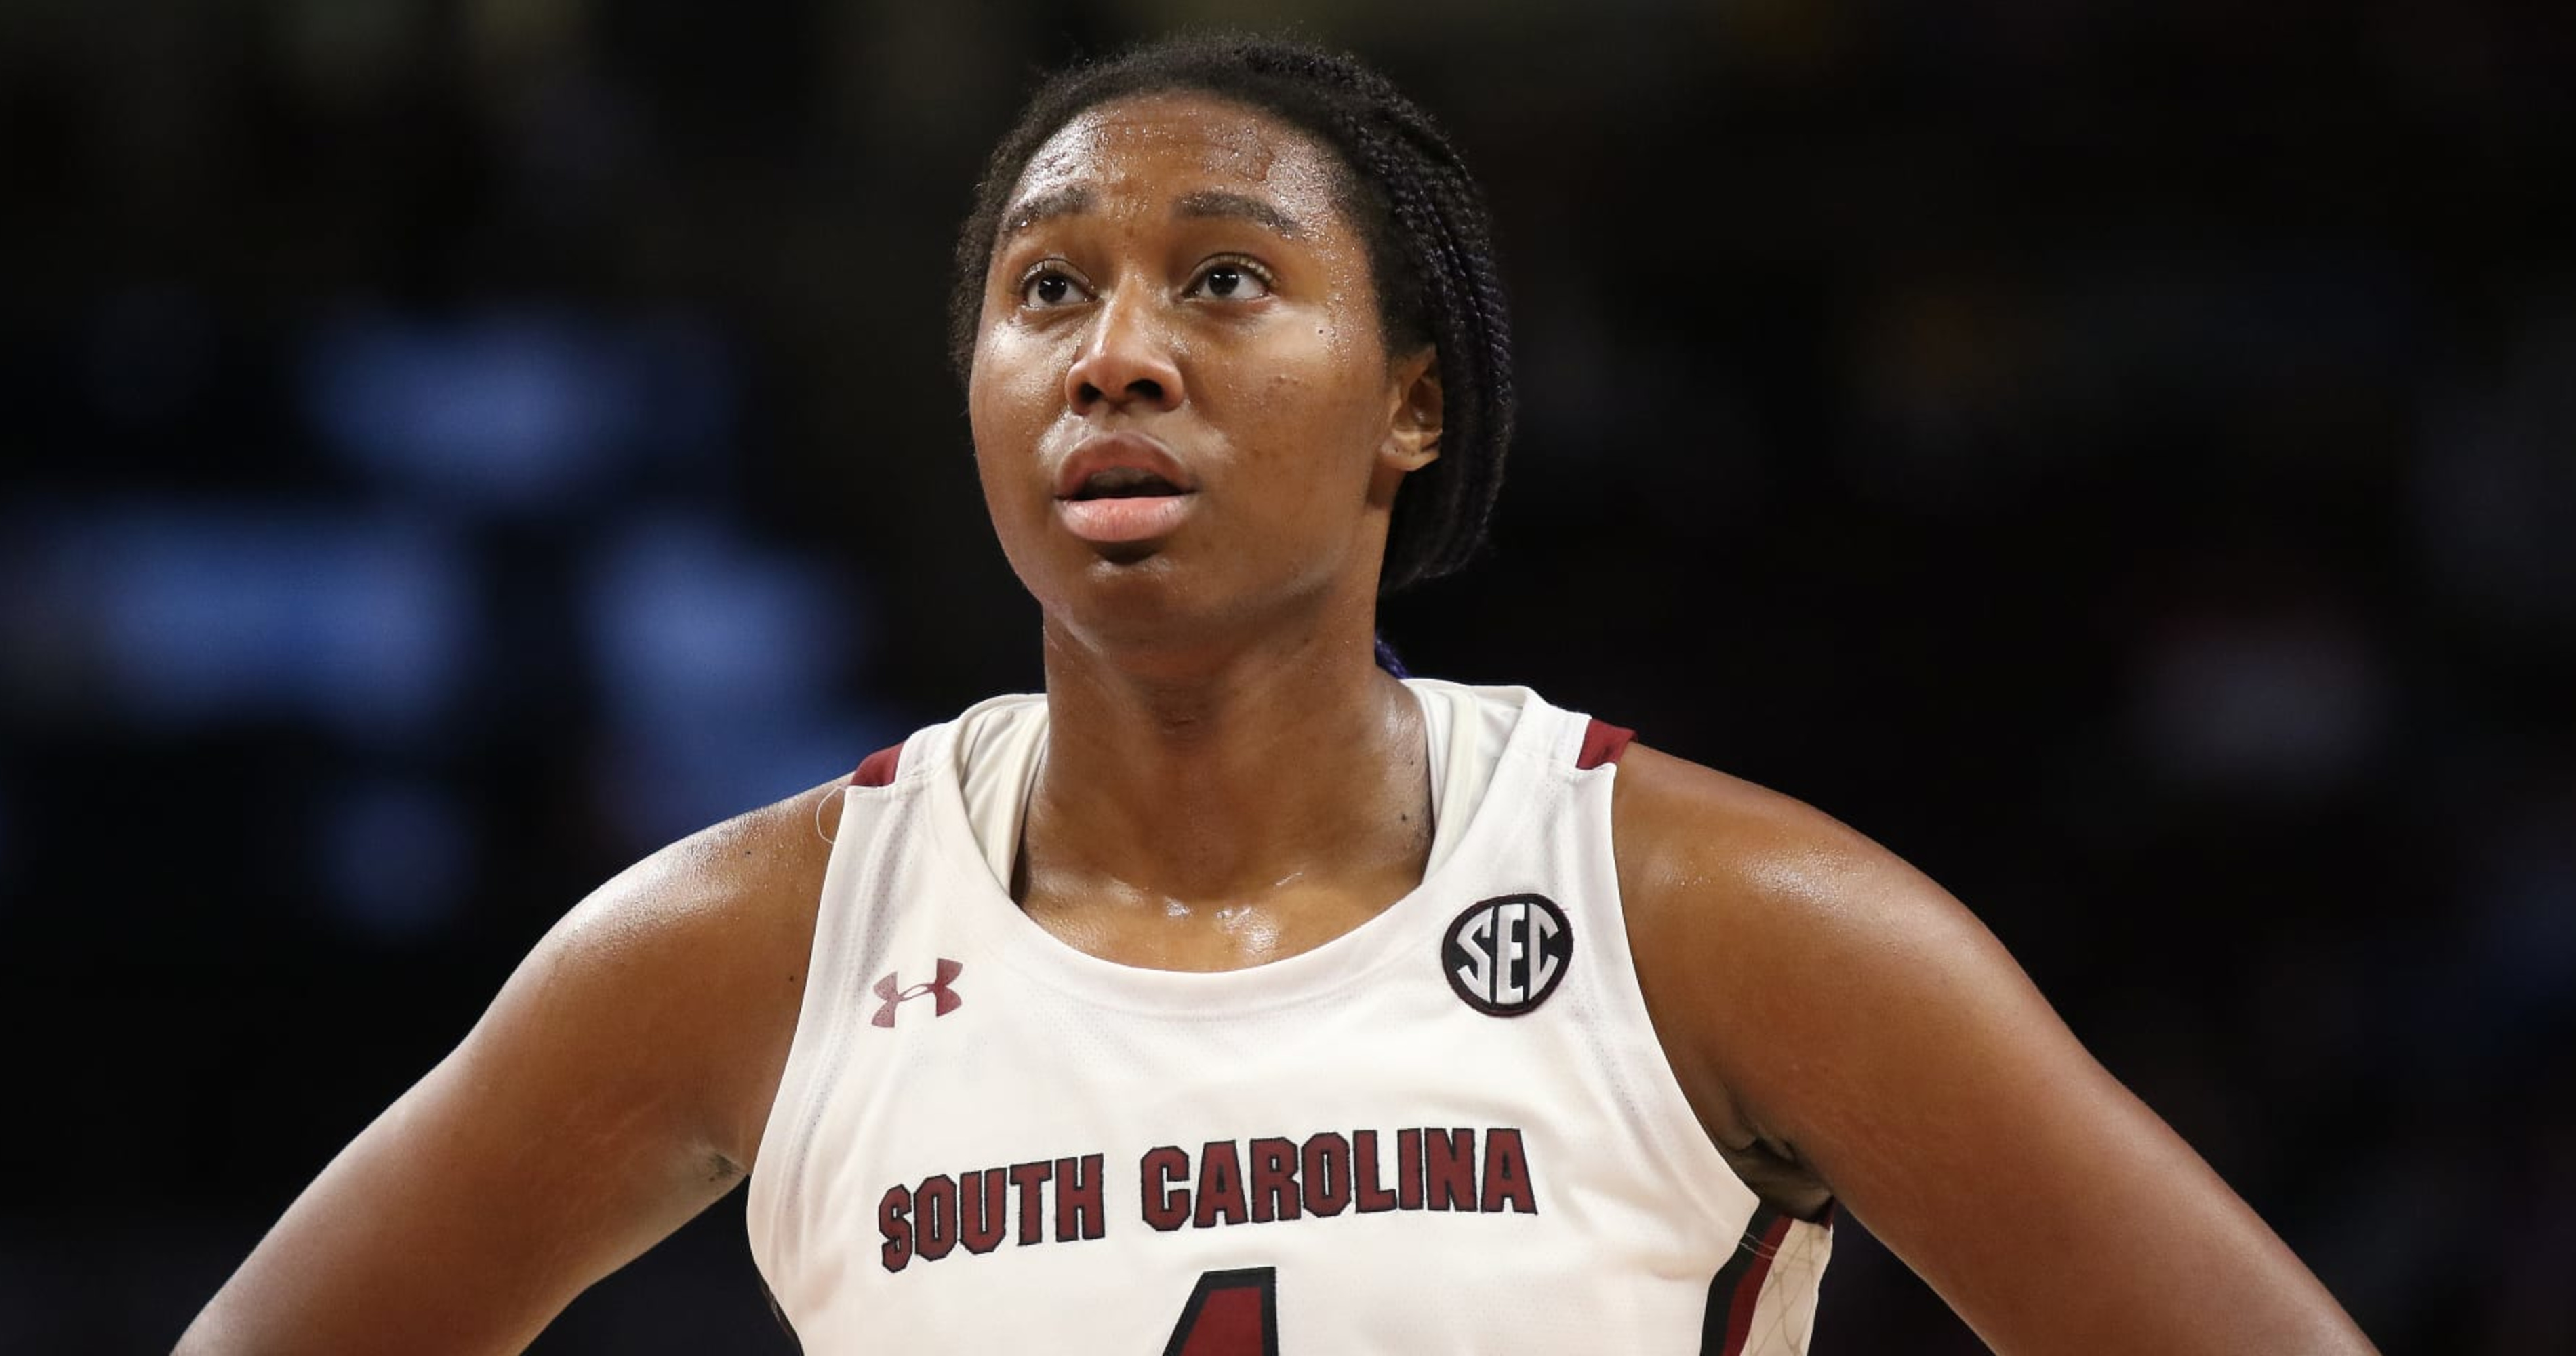 Aliyah Boston to Enter 2023 WNBA Draft After South Carolina's Final